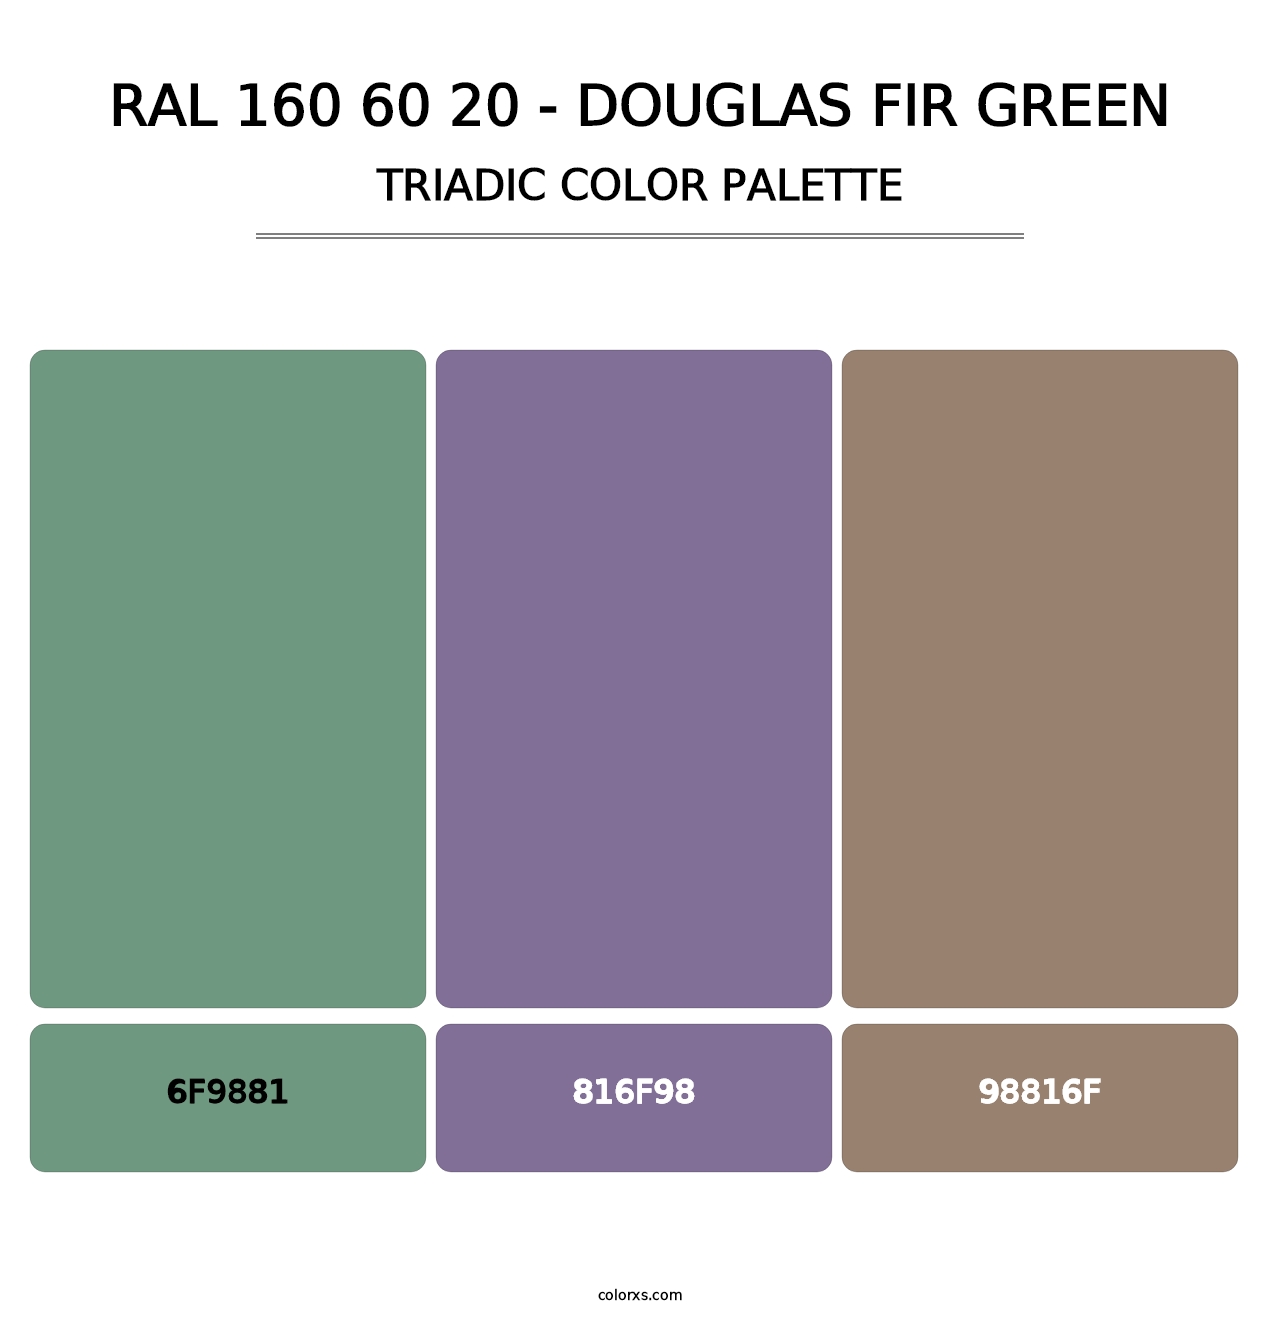 RAL 160 60 20 - Douglas Fir Green - Triadic Color Palette